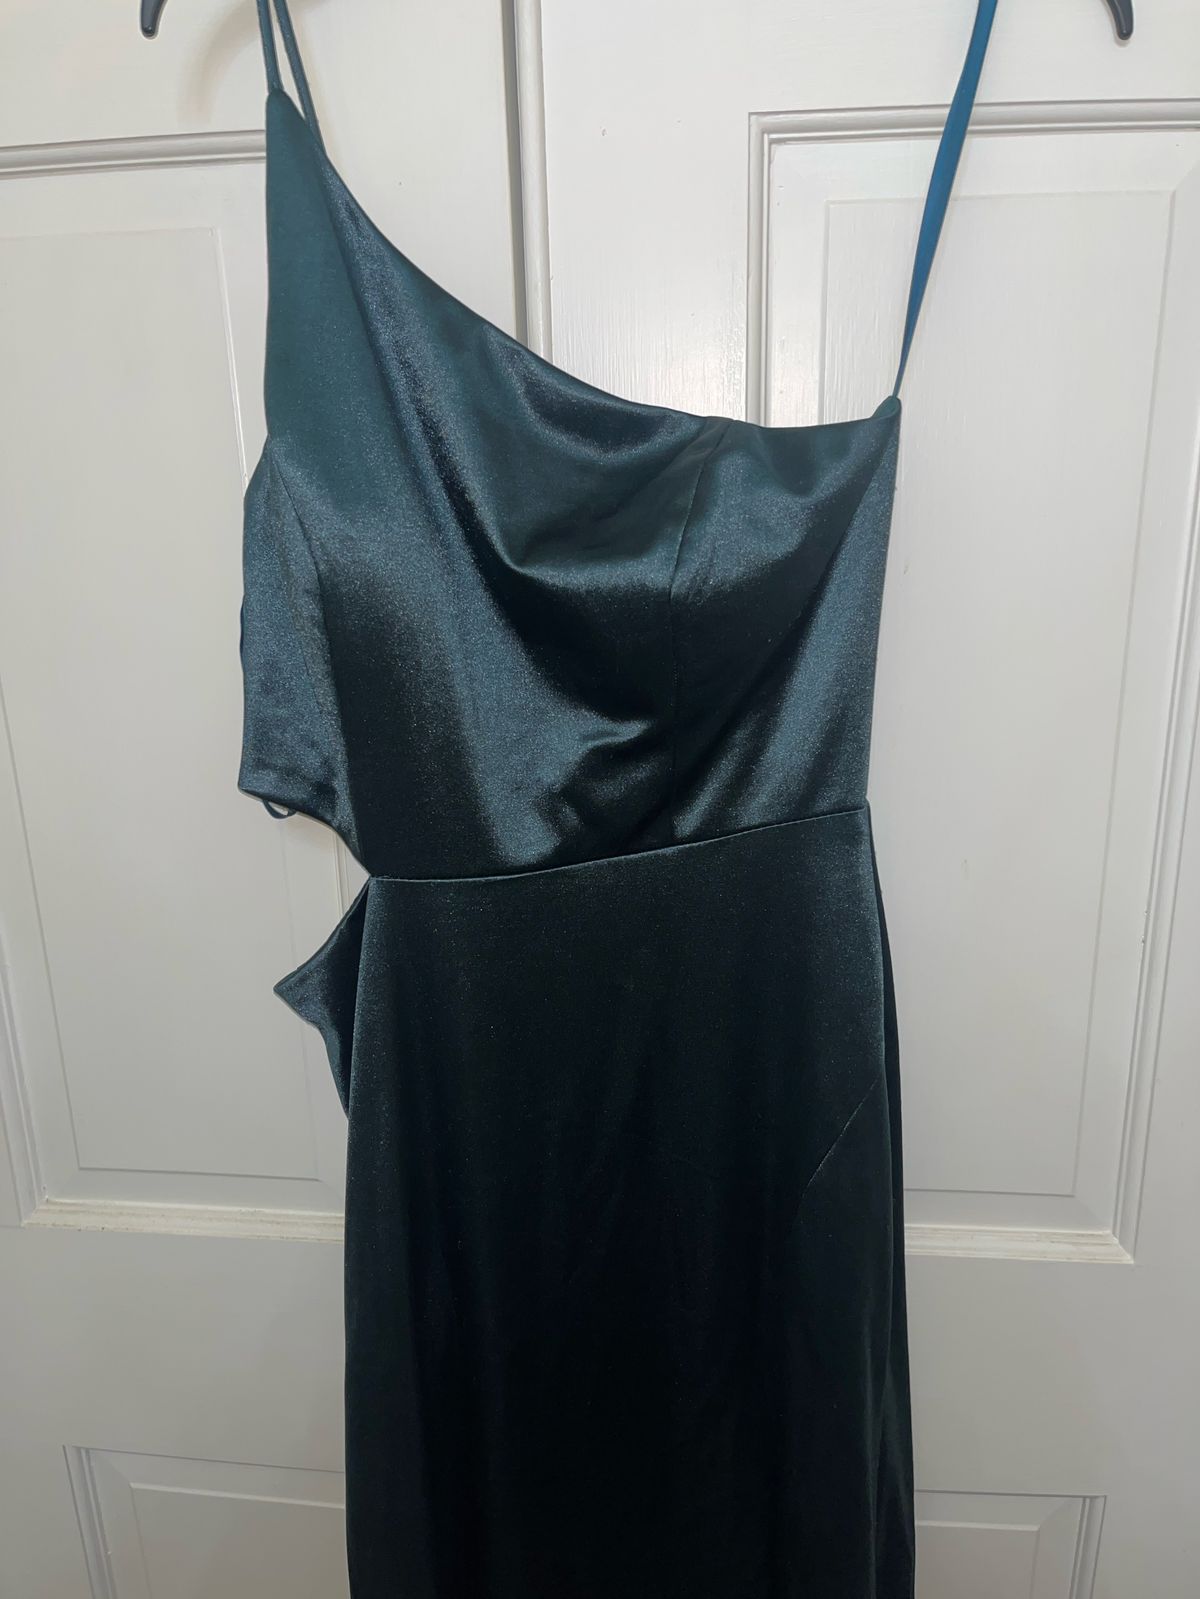 Size 4 Prom One Shoulder Green Side Slit Dress on Queenly